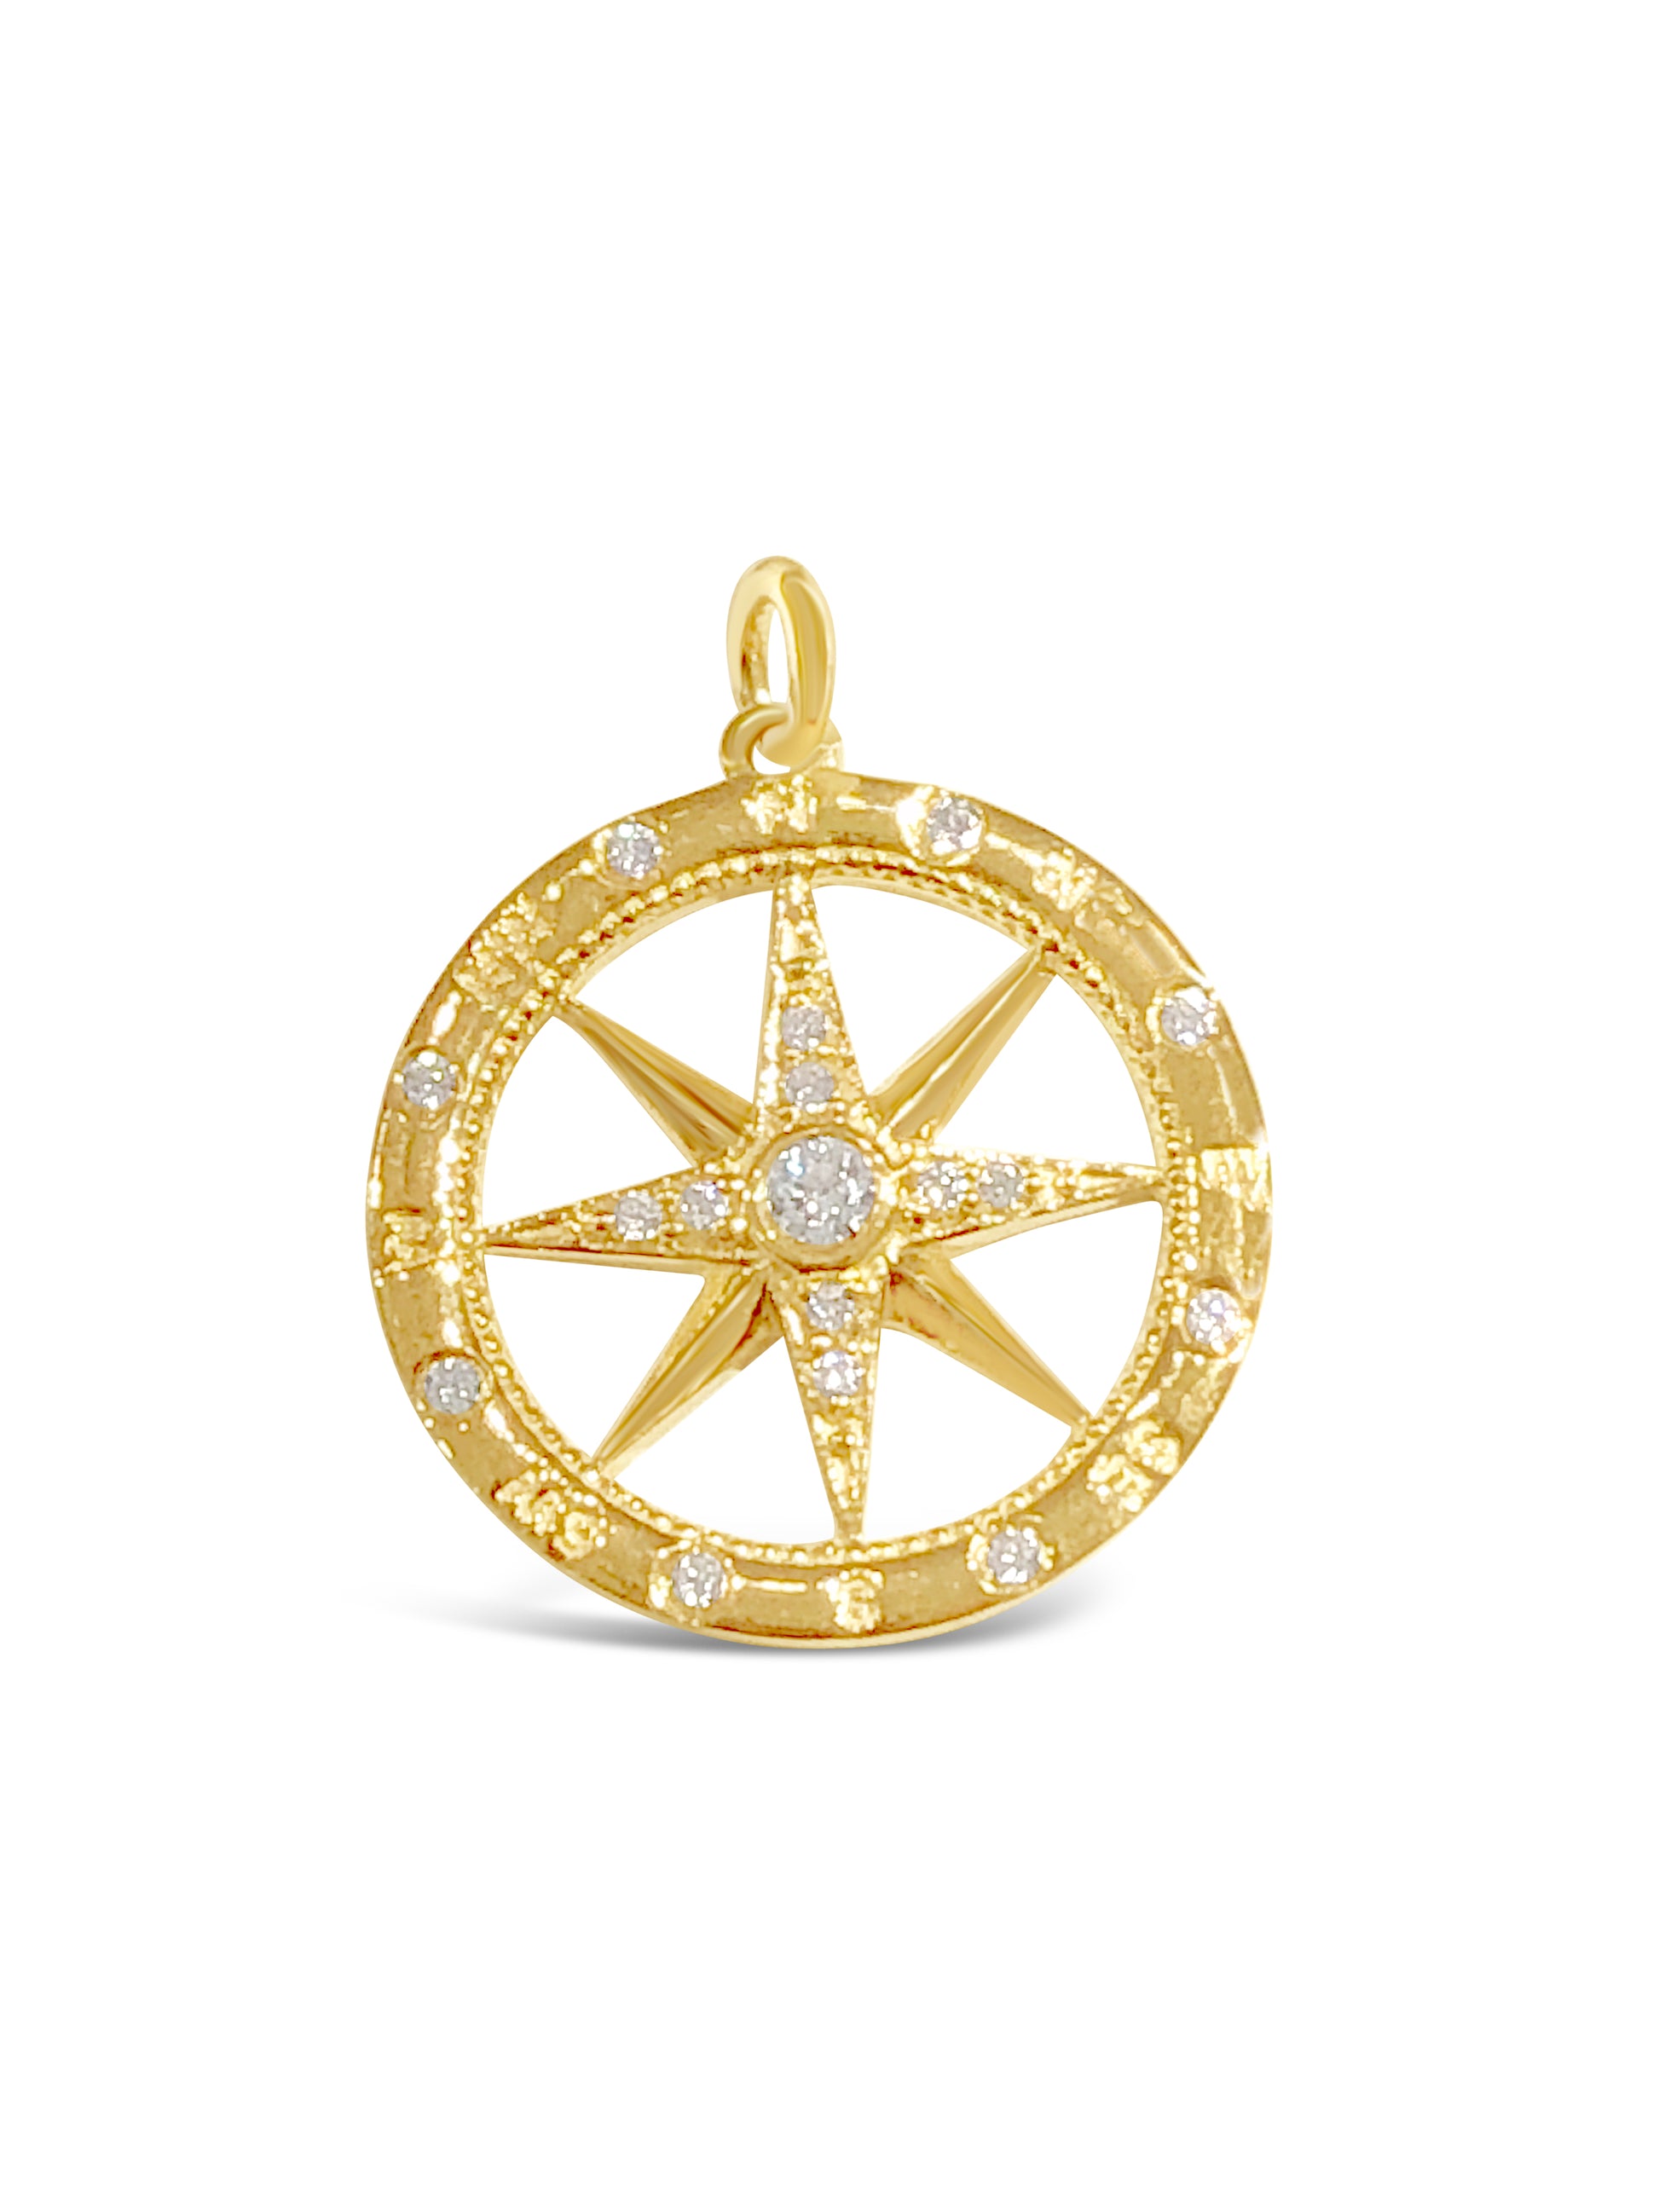 diamond compass rose pendant 14k gold handmade